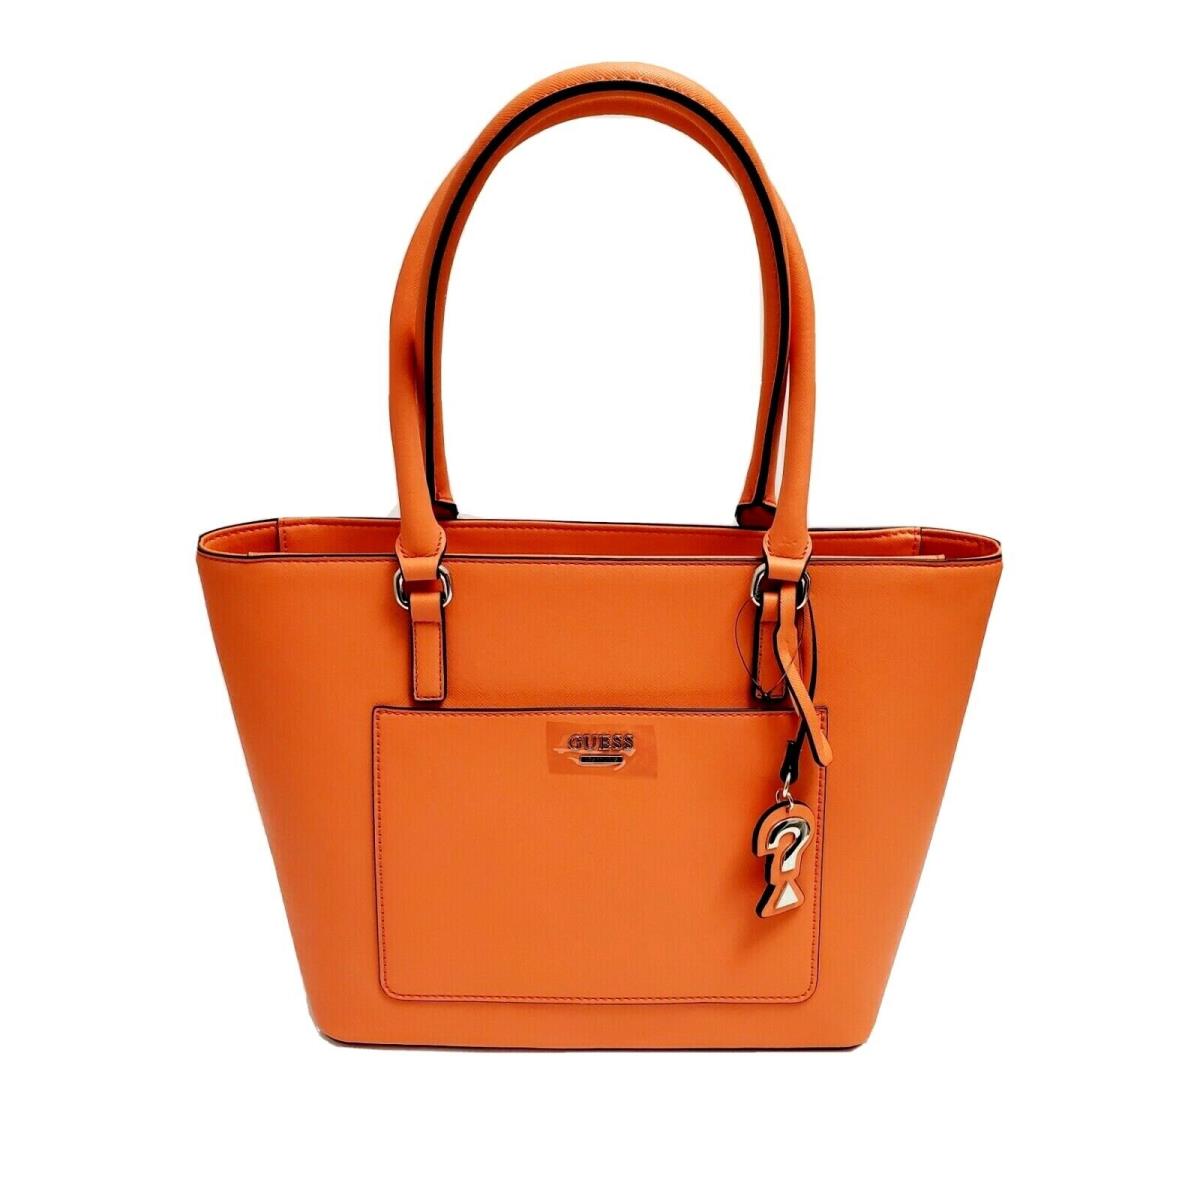 Guess Women s Tote Cuba Handbag Purse Leather Color Papaya Style SF750822